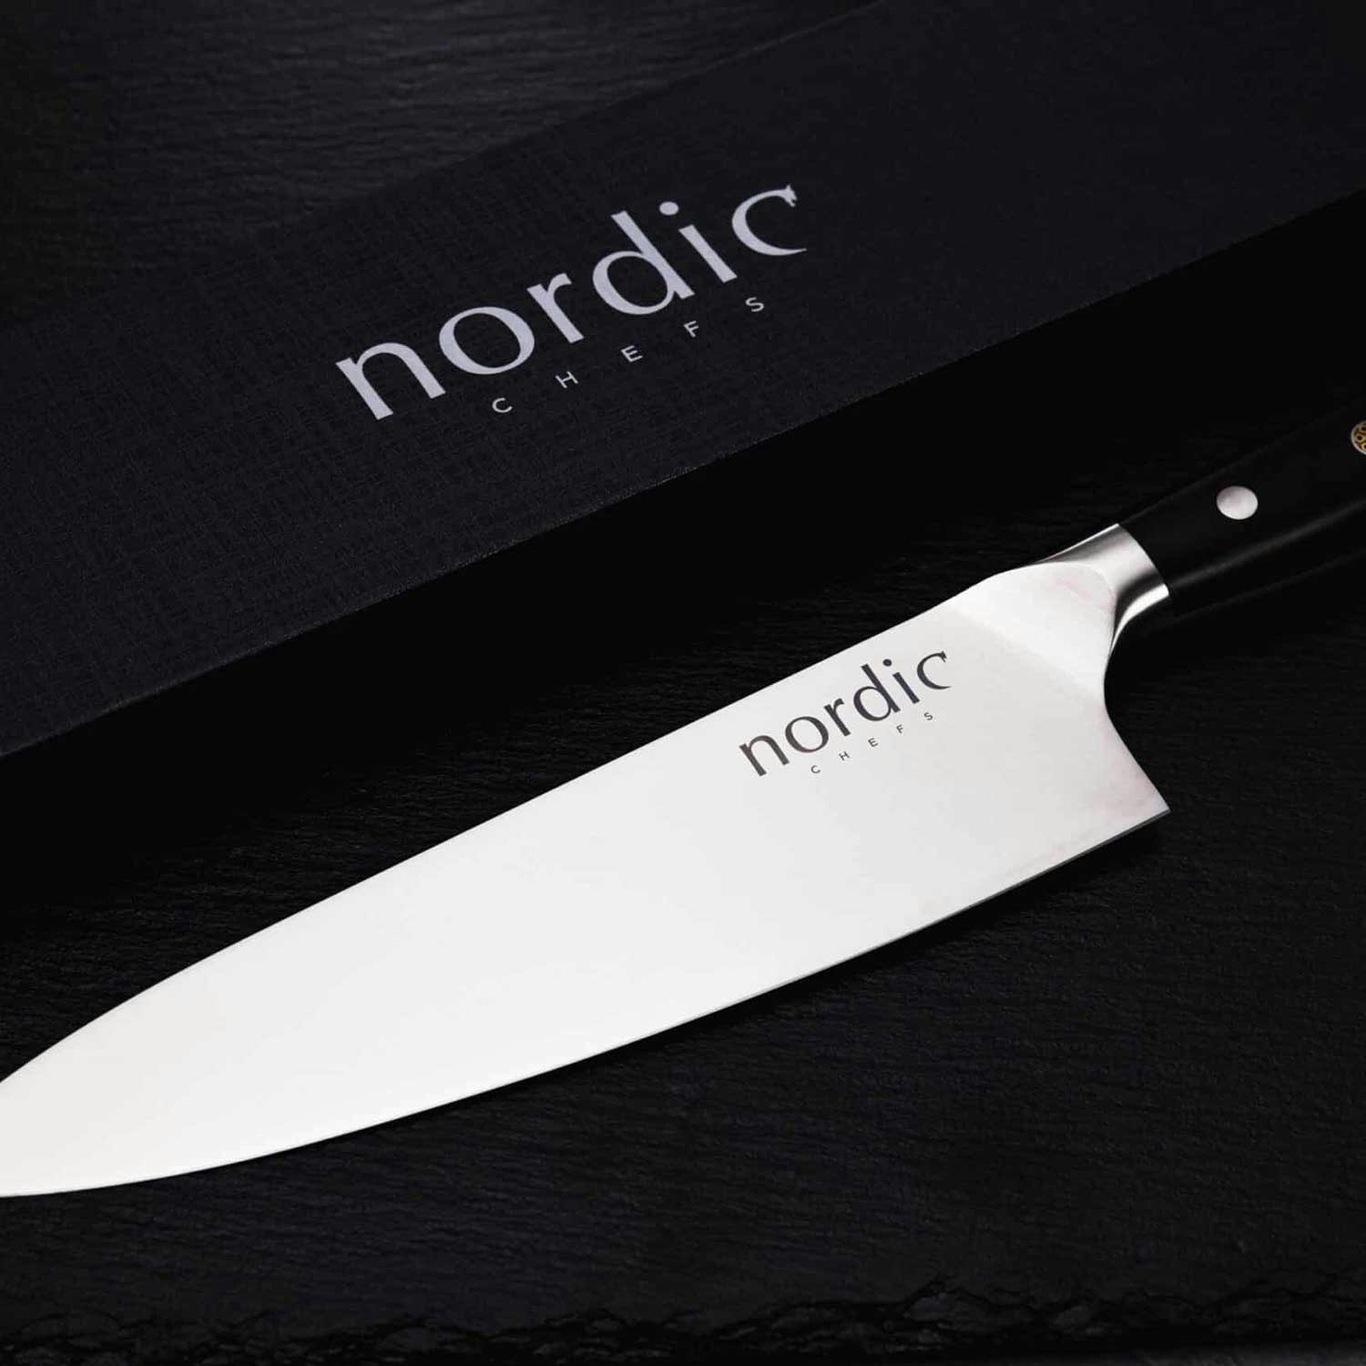 https://royaldesign.com/image/2/nordic-chef-nordic-chef-knife-34-cm-6?w=800&quality=80